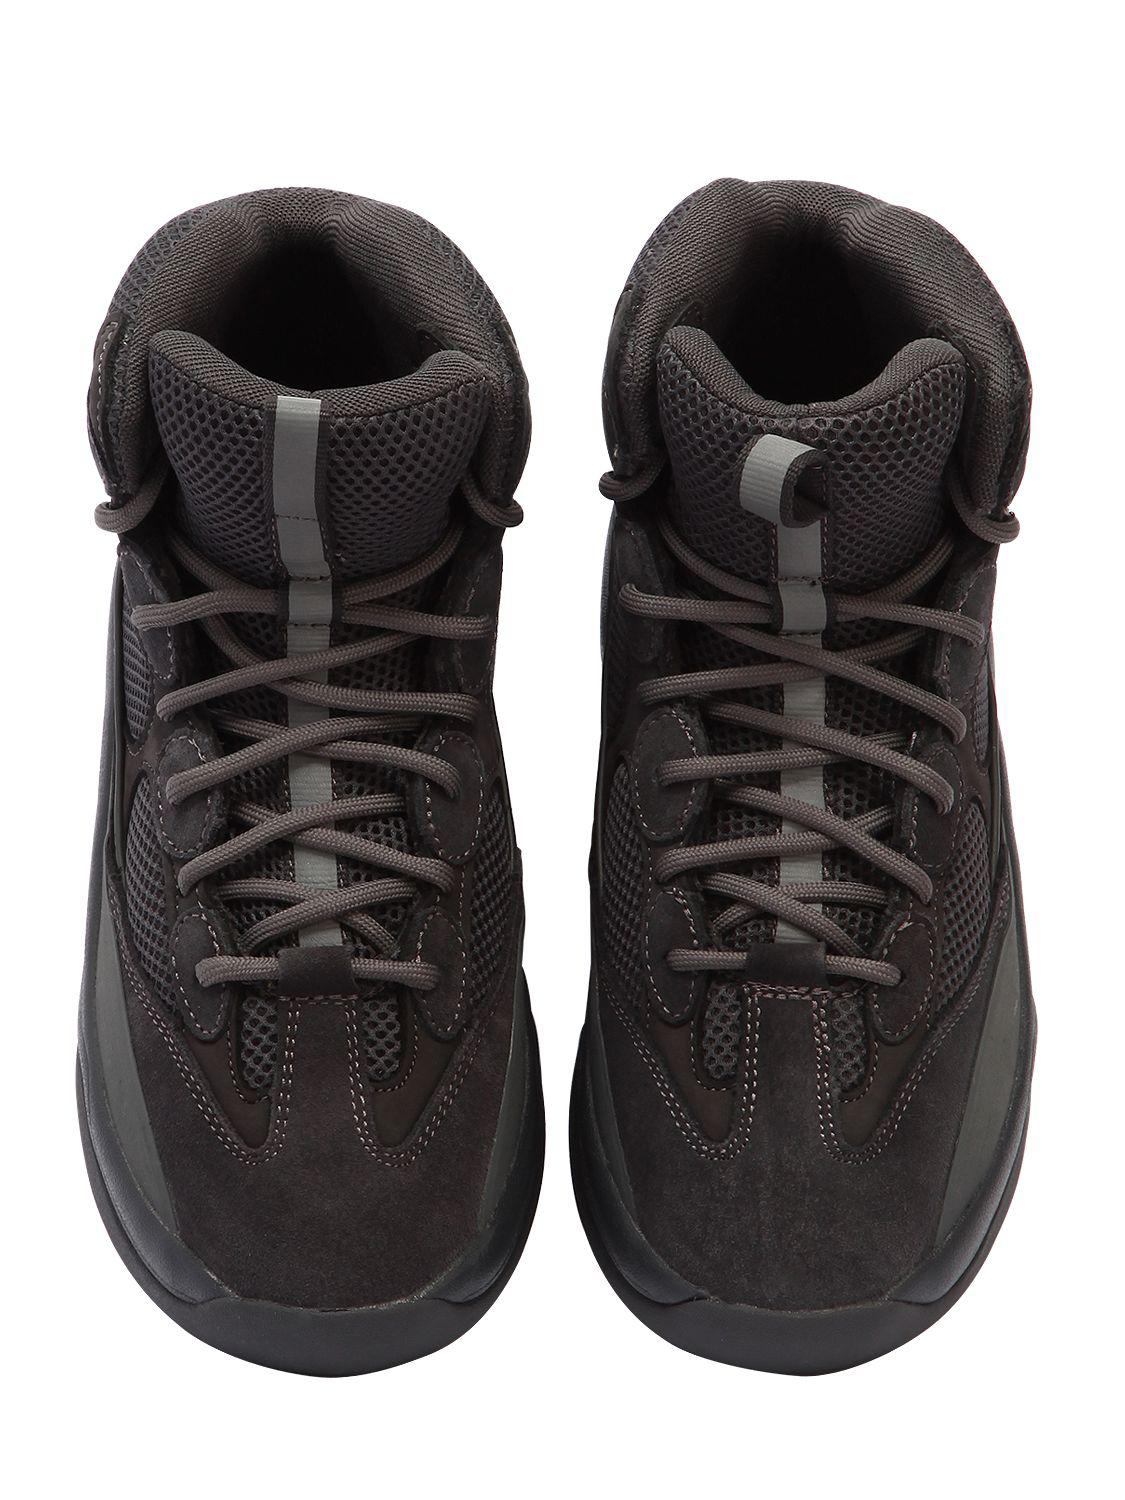 Yeezy Leather Season 6 Desert Rat Boots in Grey (Gray) for Men - Lyst